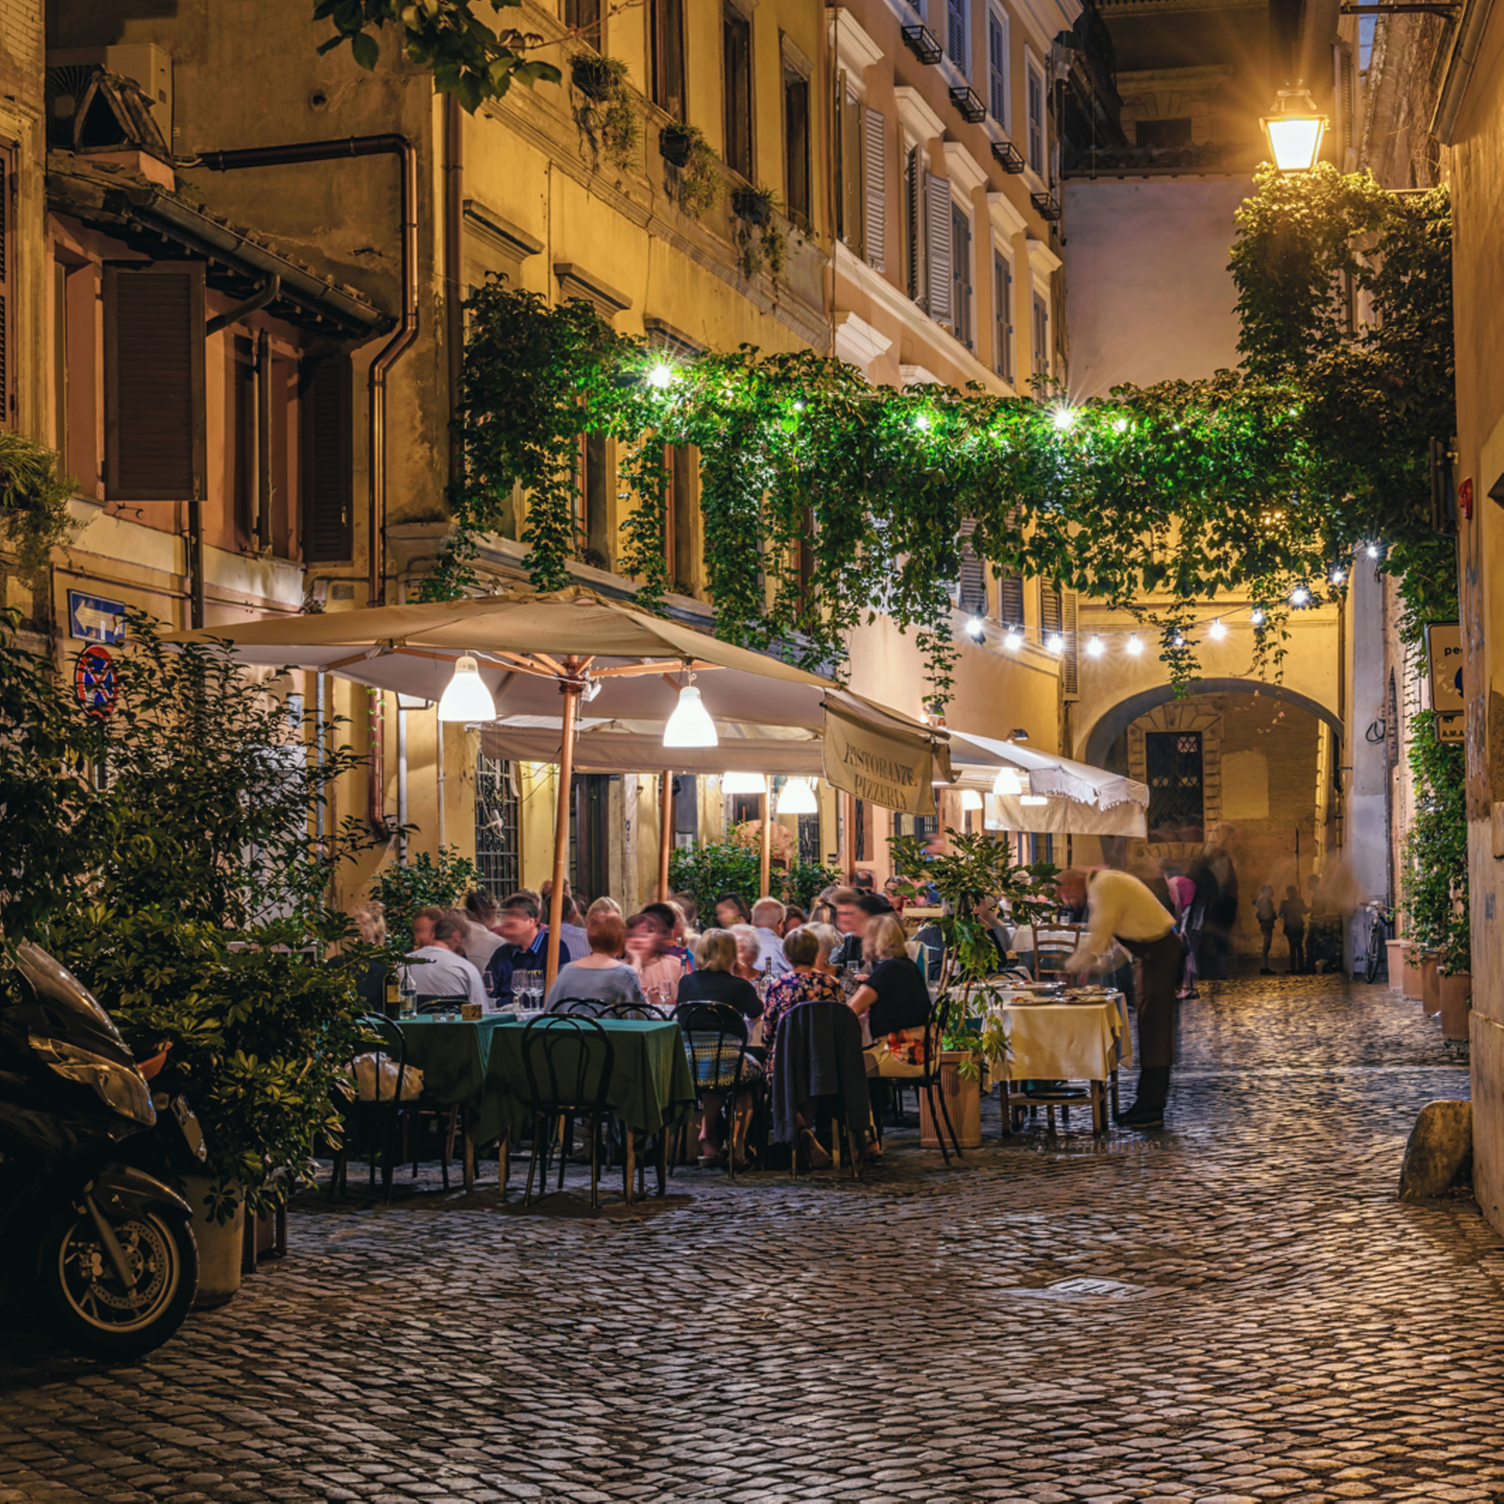 Terraza de un restaurante en una calle de Trastevere en Roma